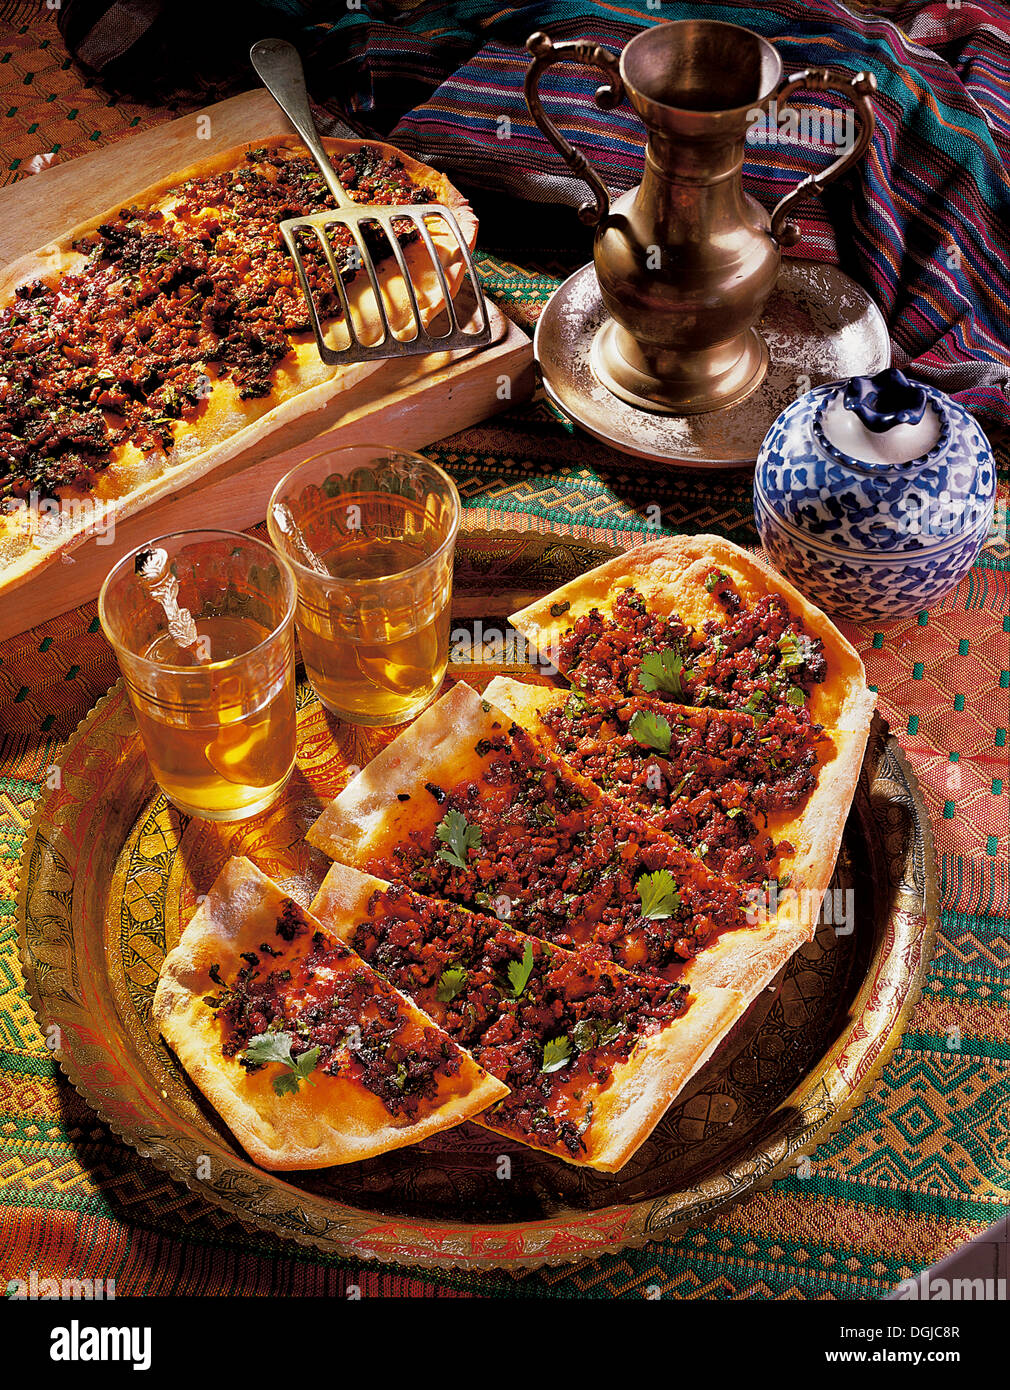 Arab pizza, Morocco. Stock Photo